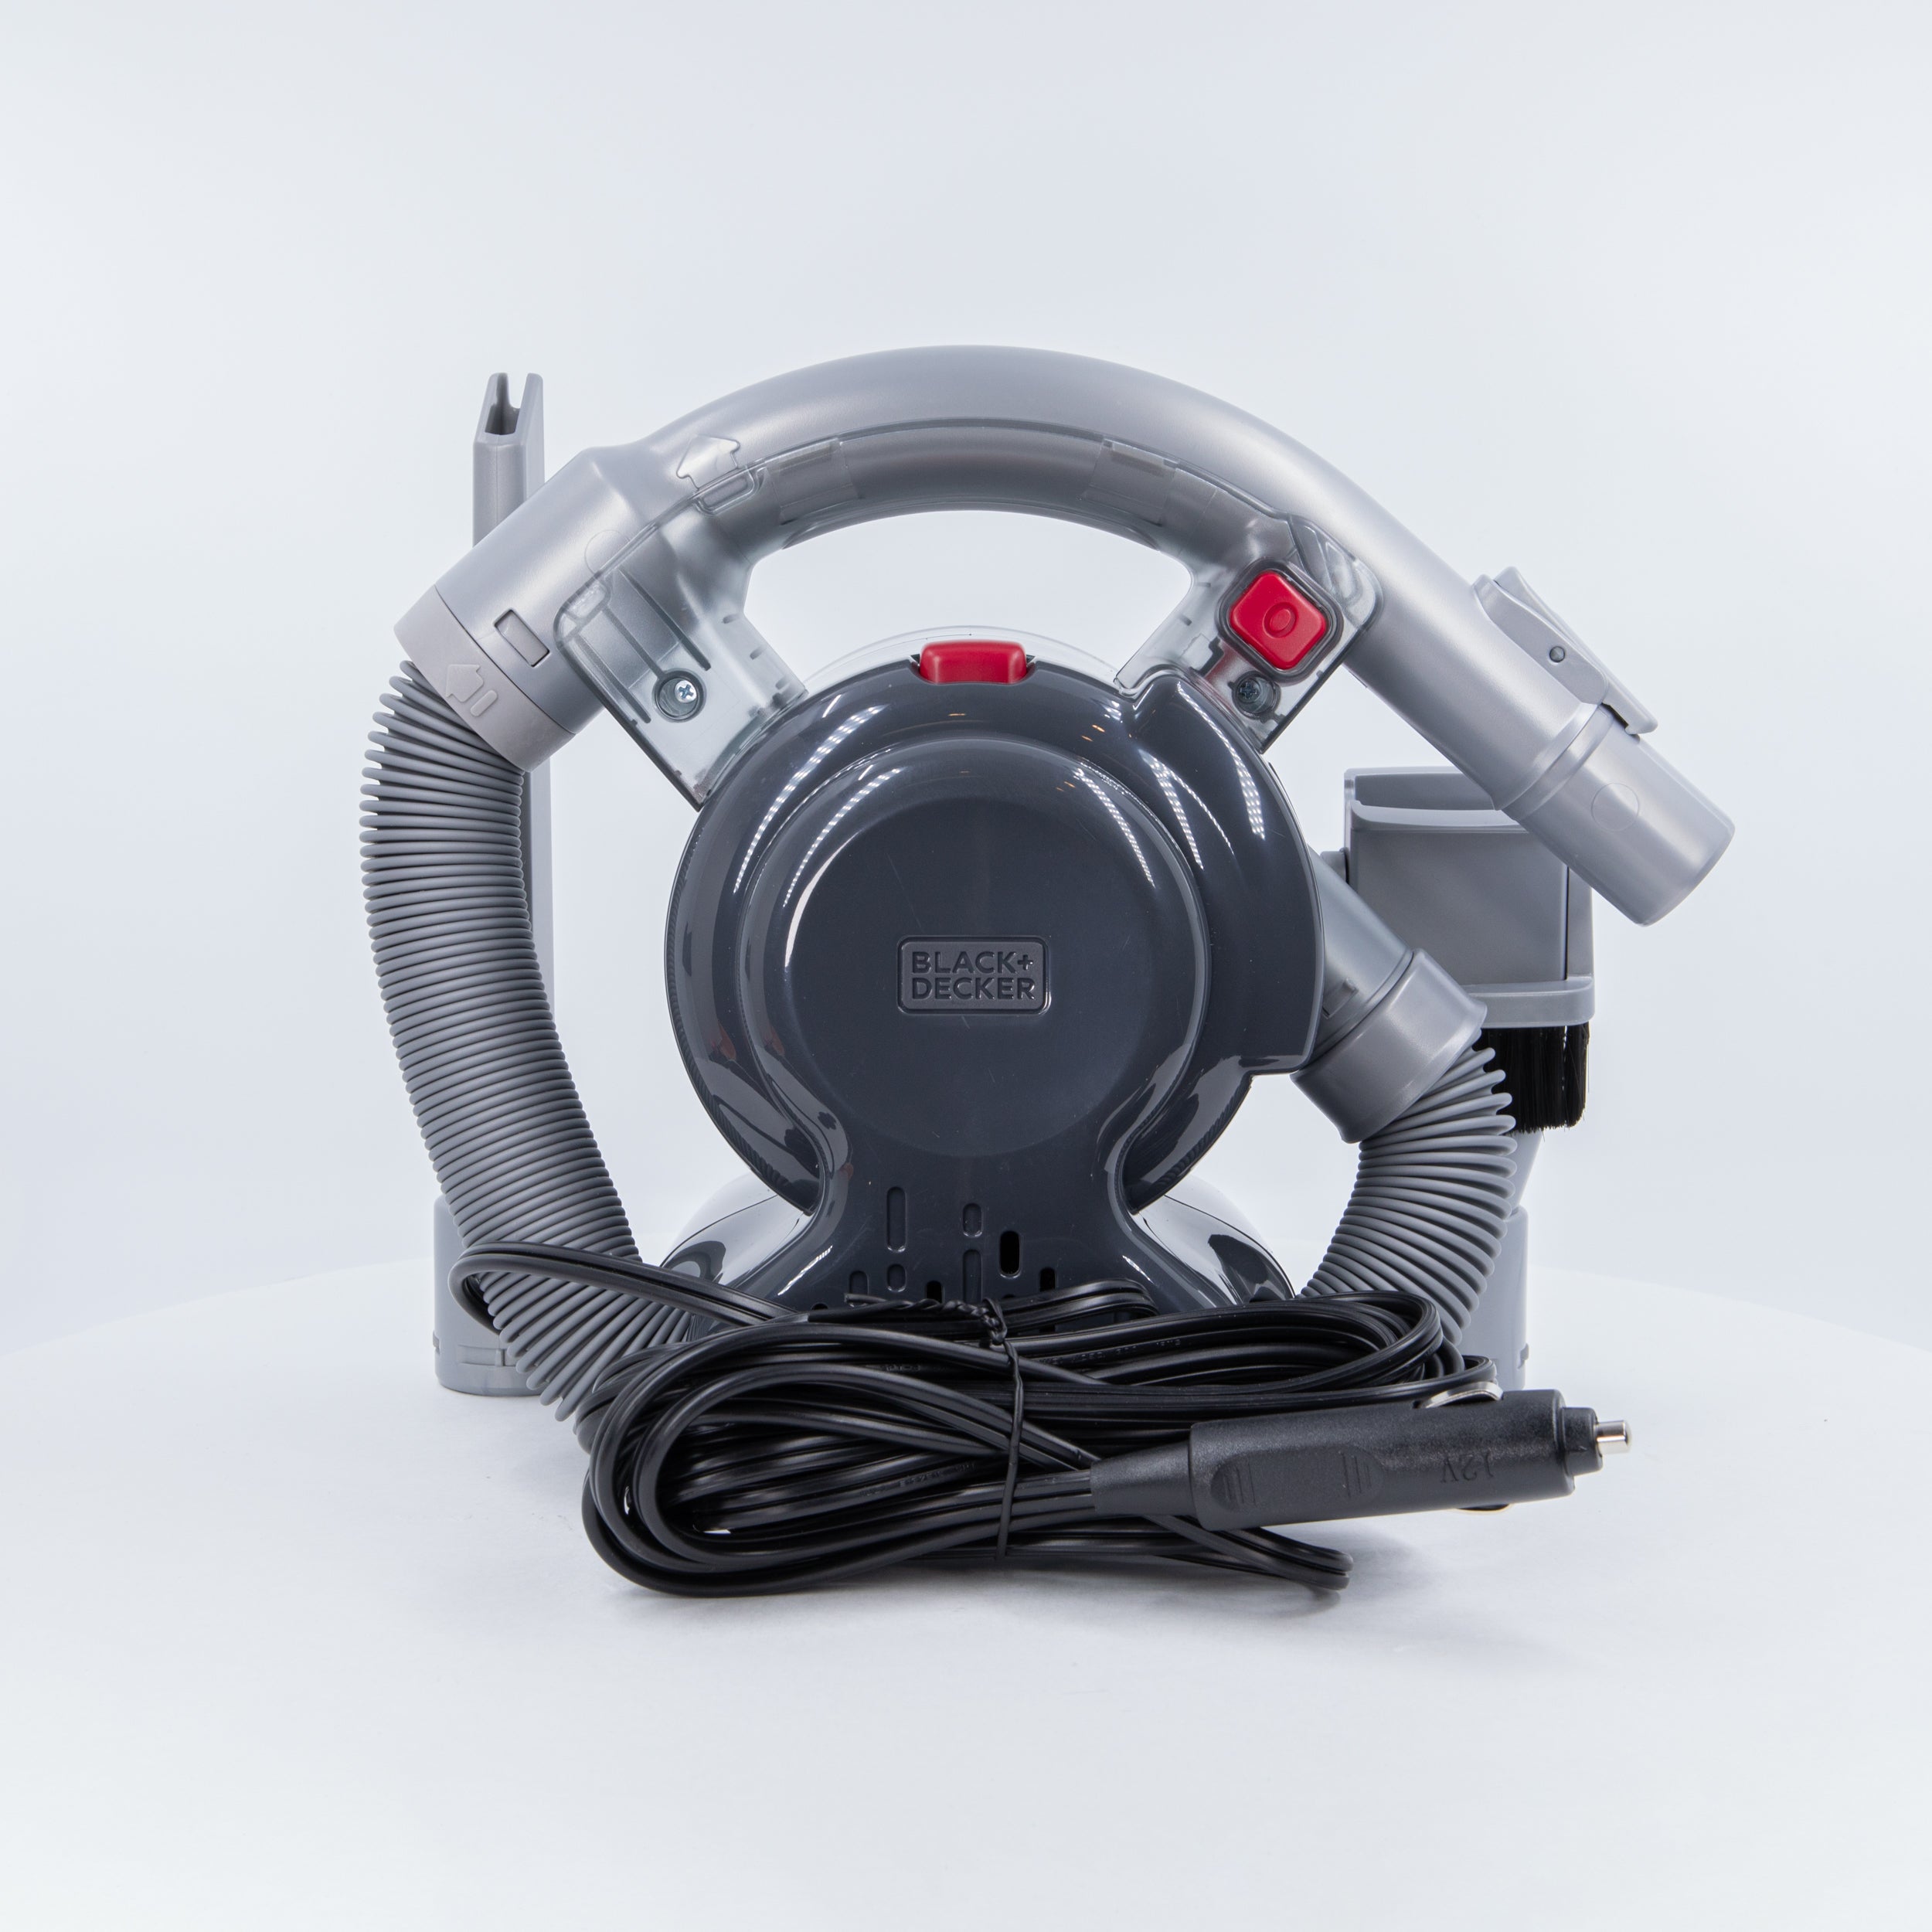 Black & Decker PD1200AV Dustbuster Flexi Vacuum review